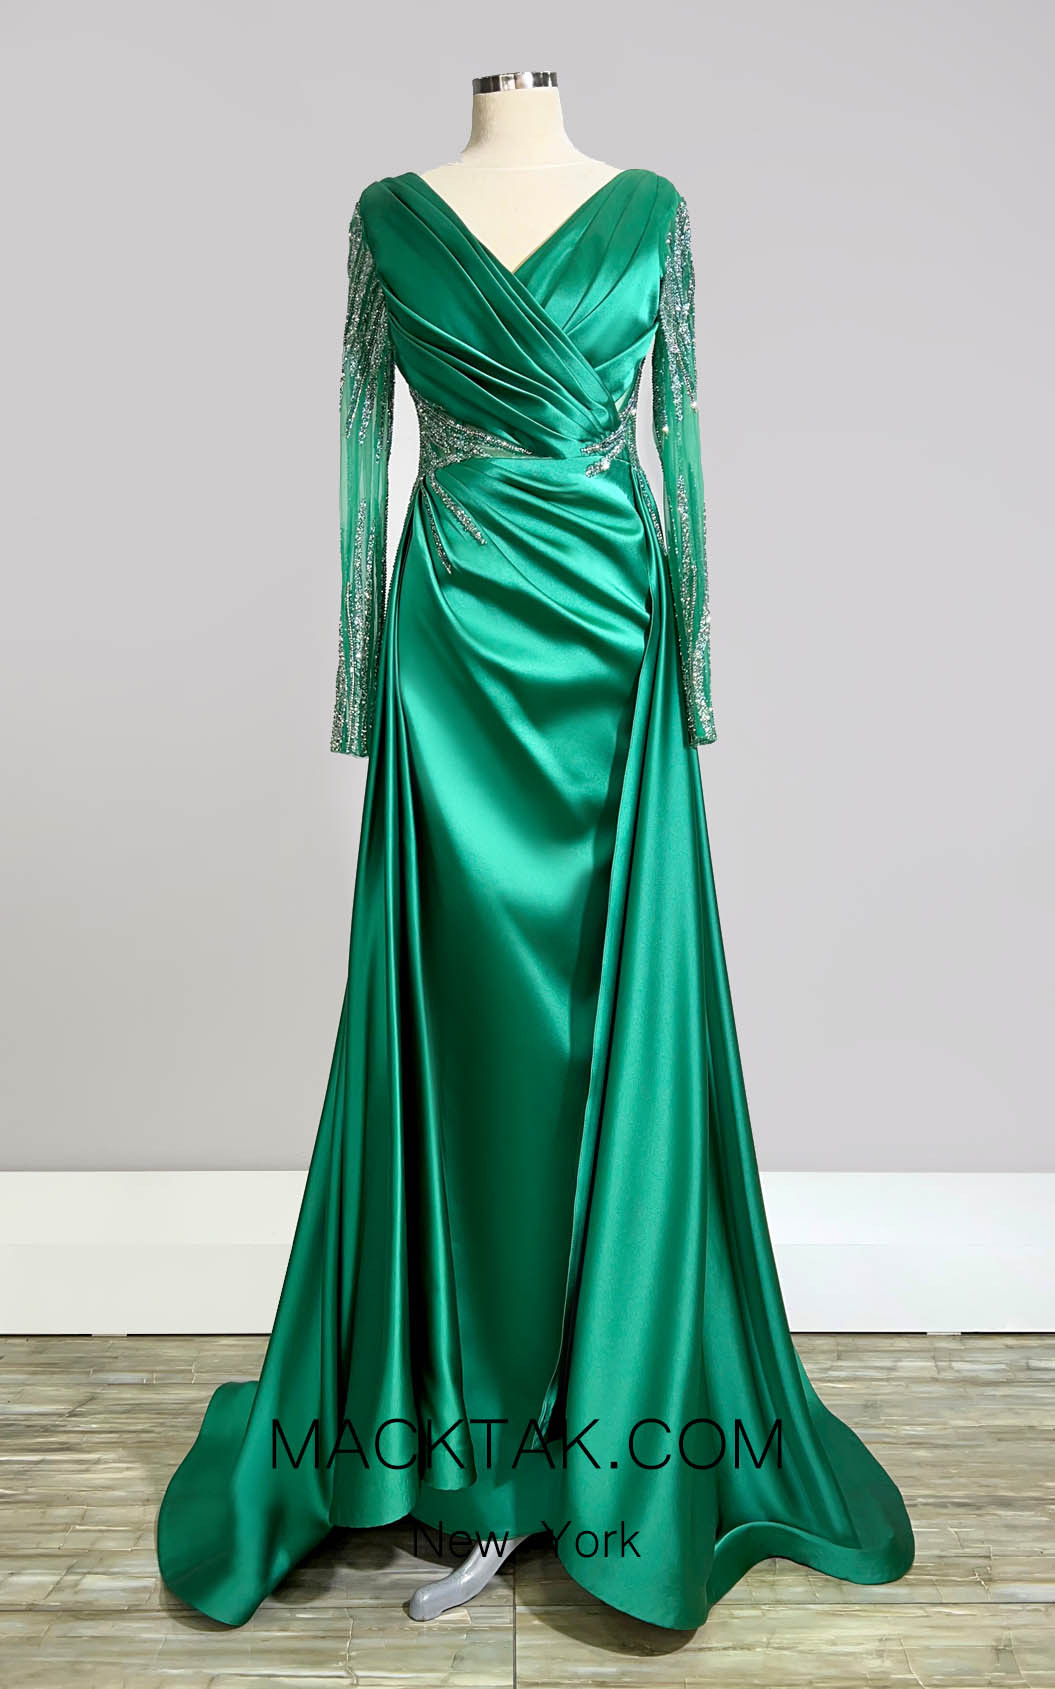 MackTak Collection 7031 Dress